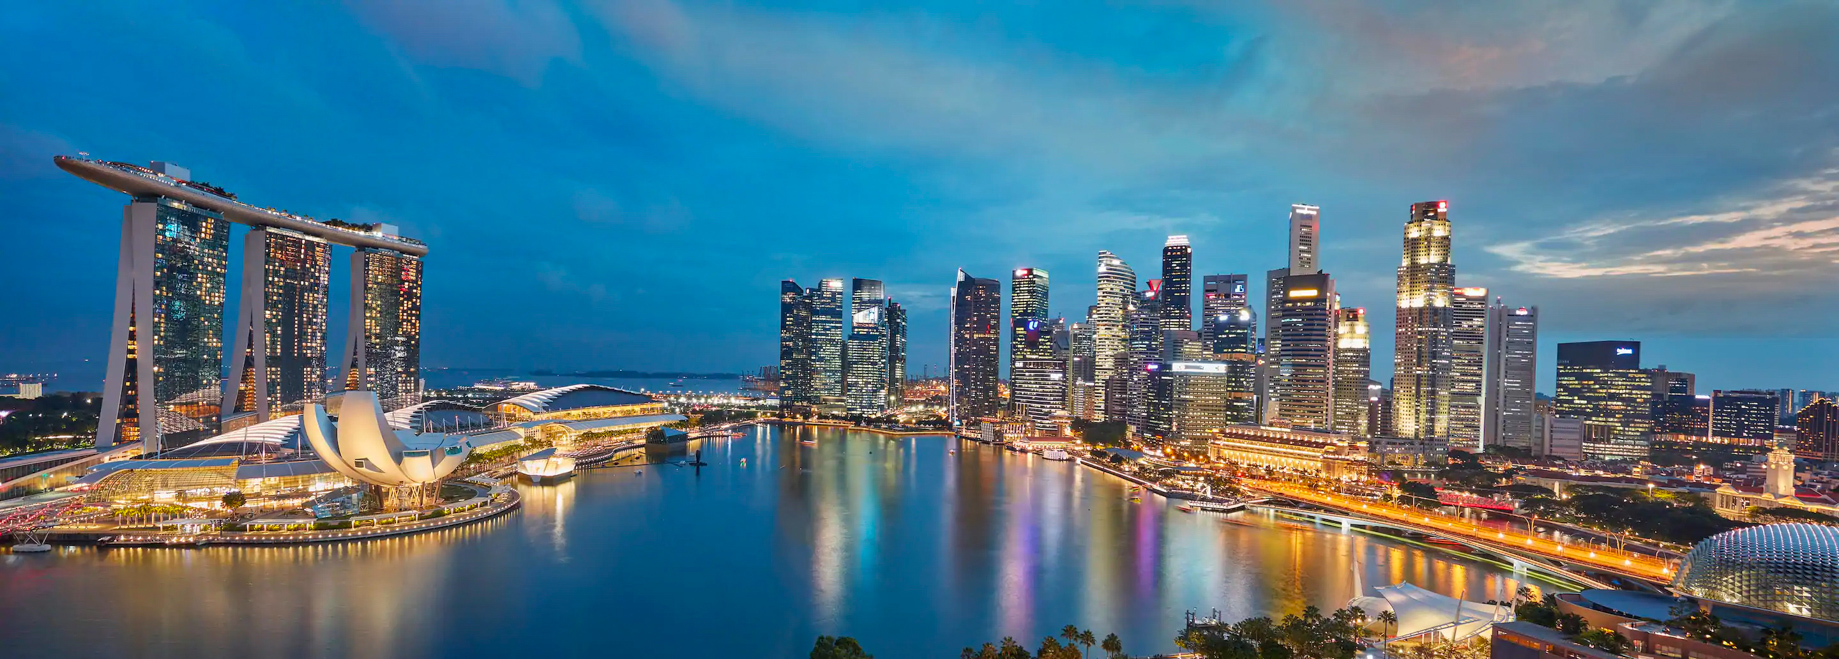 Mandarin Oriental, Singapore Hotel – Singapore – Marina Bay View Dusk